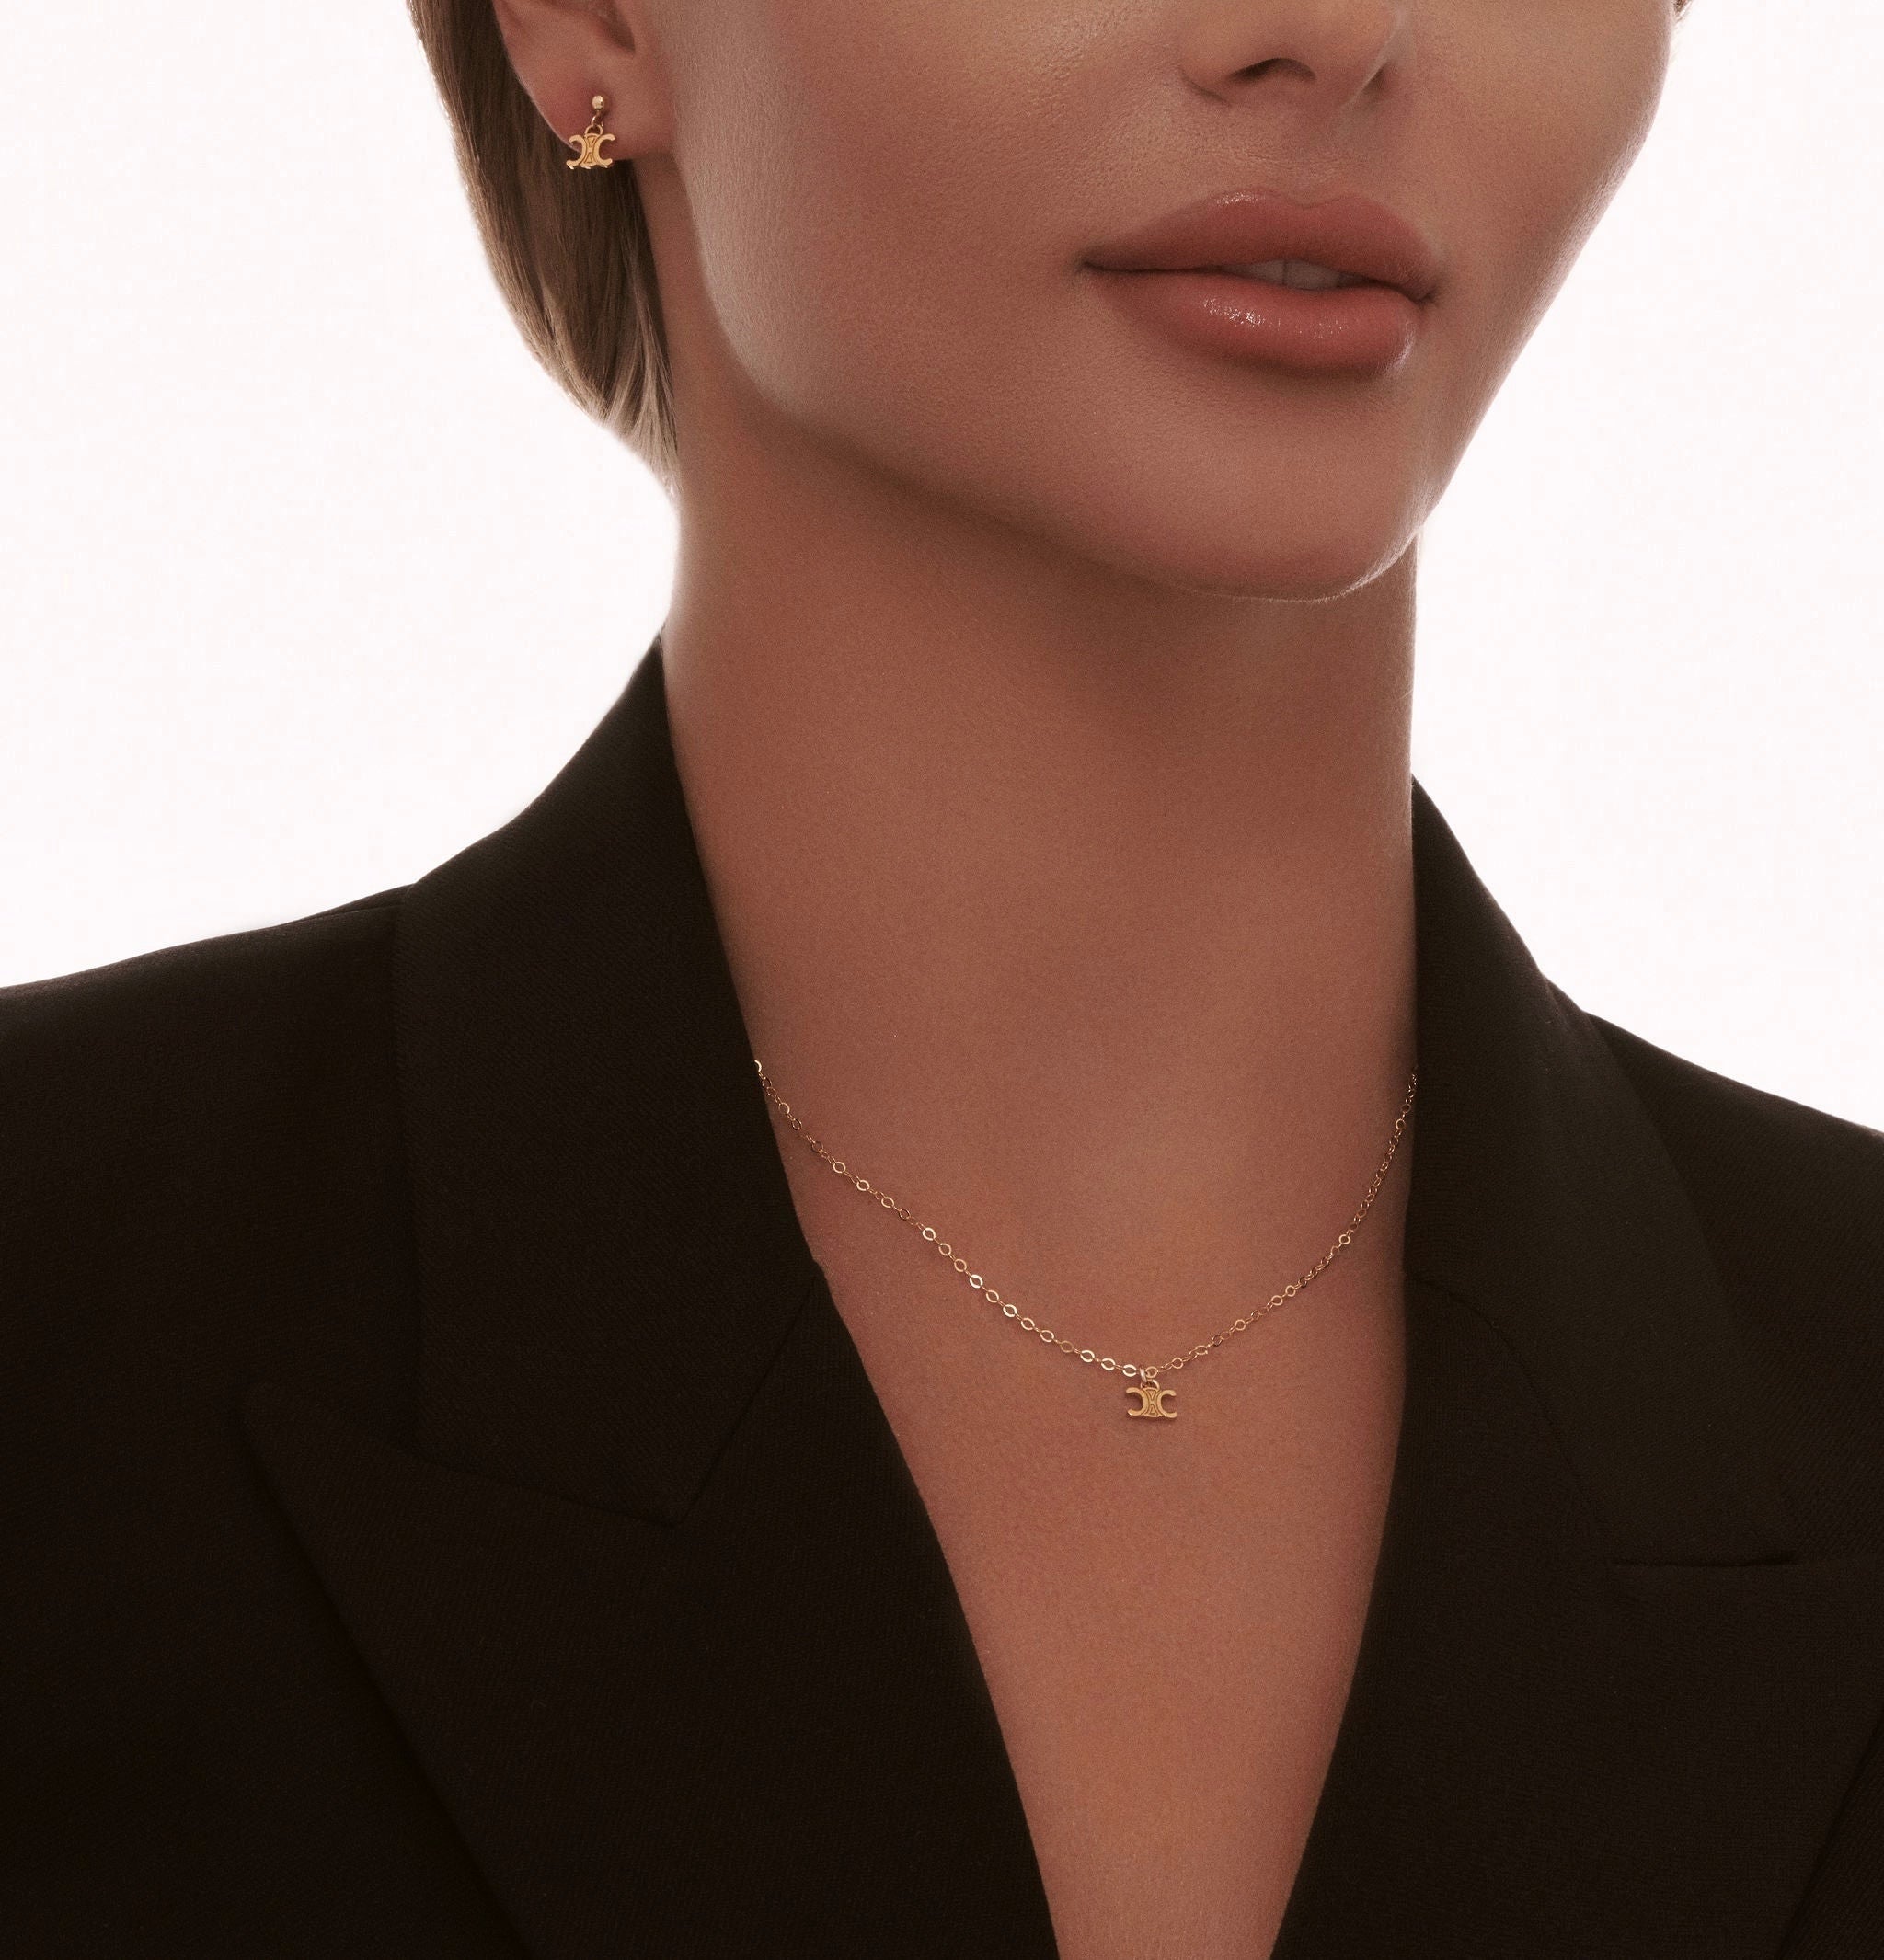 Mini Gold Logo Stud Earrings